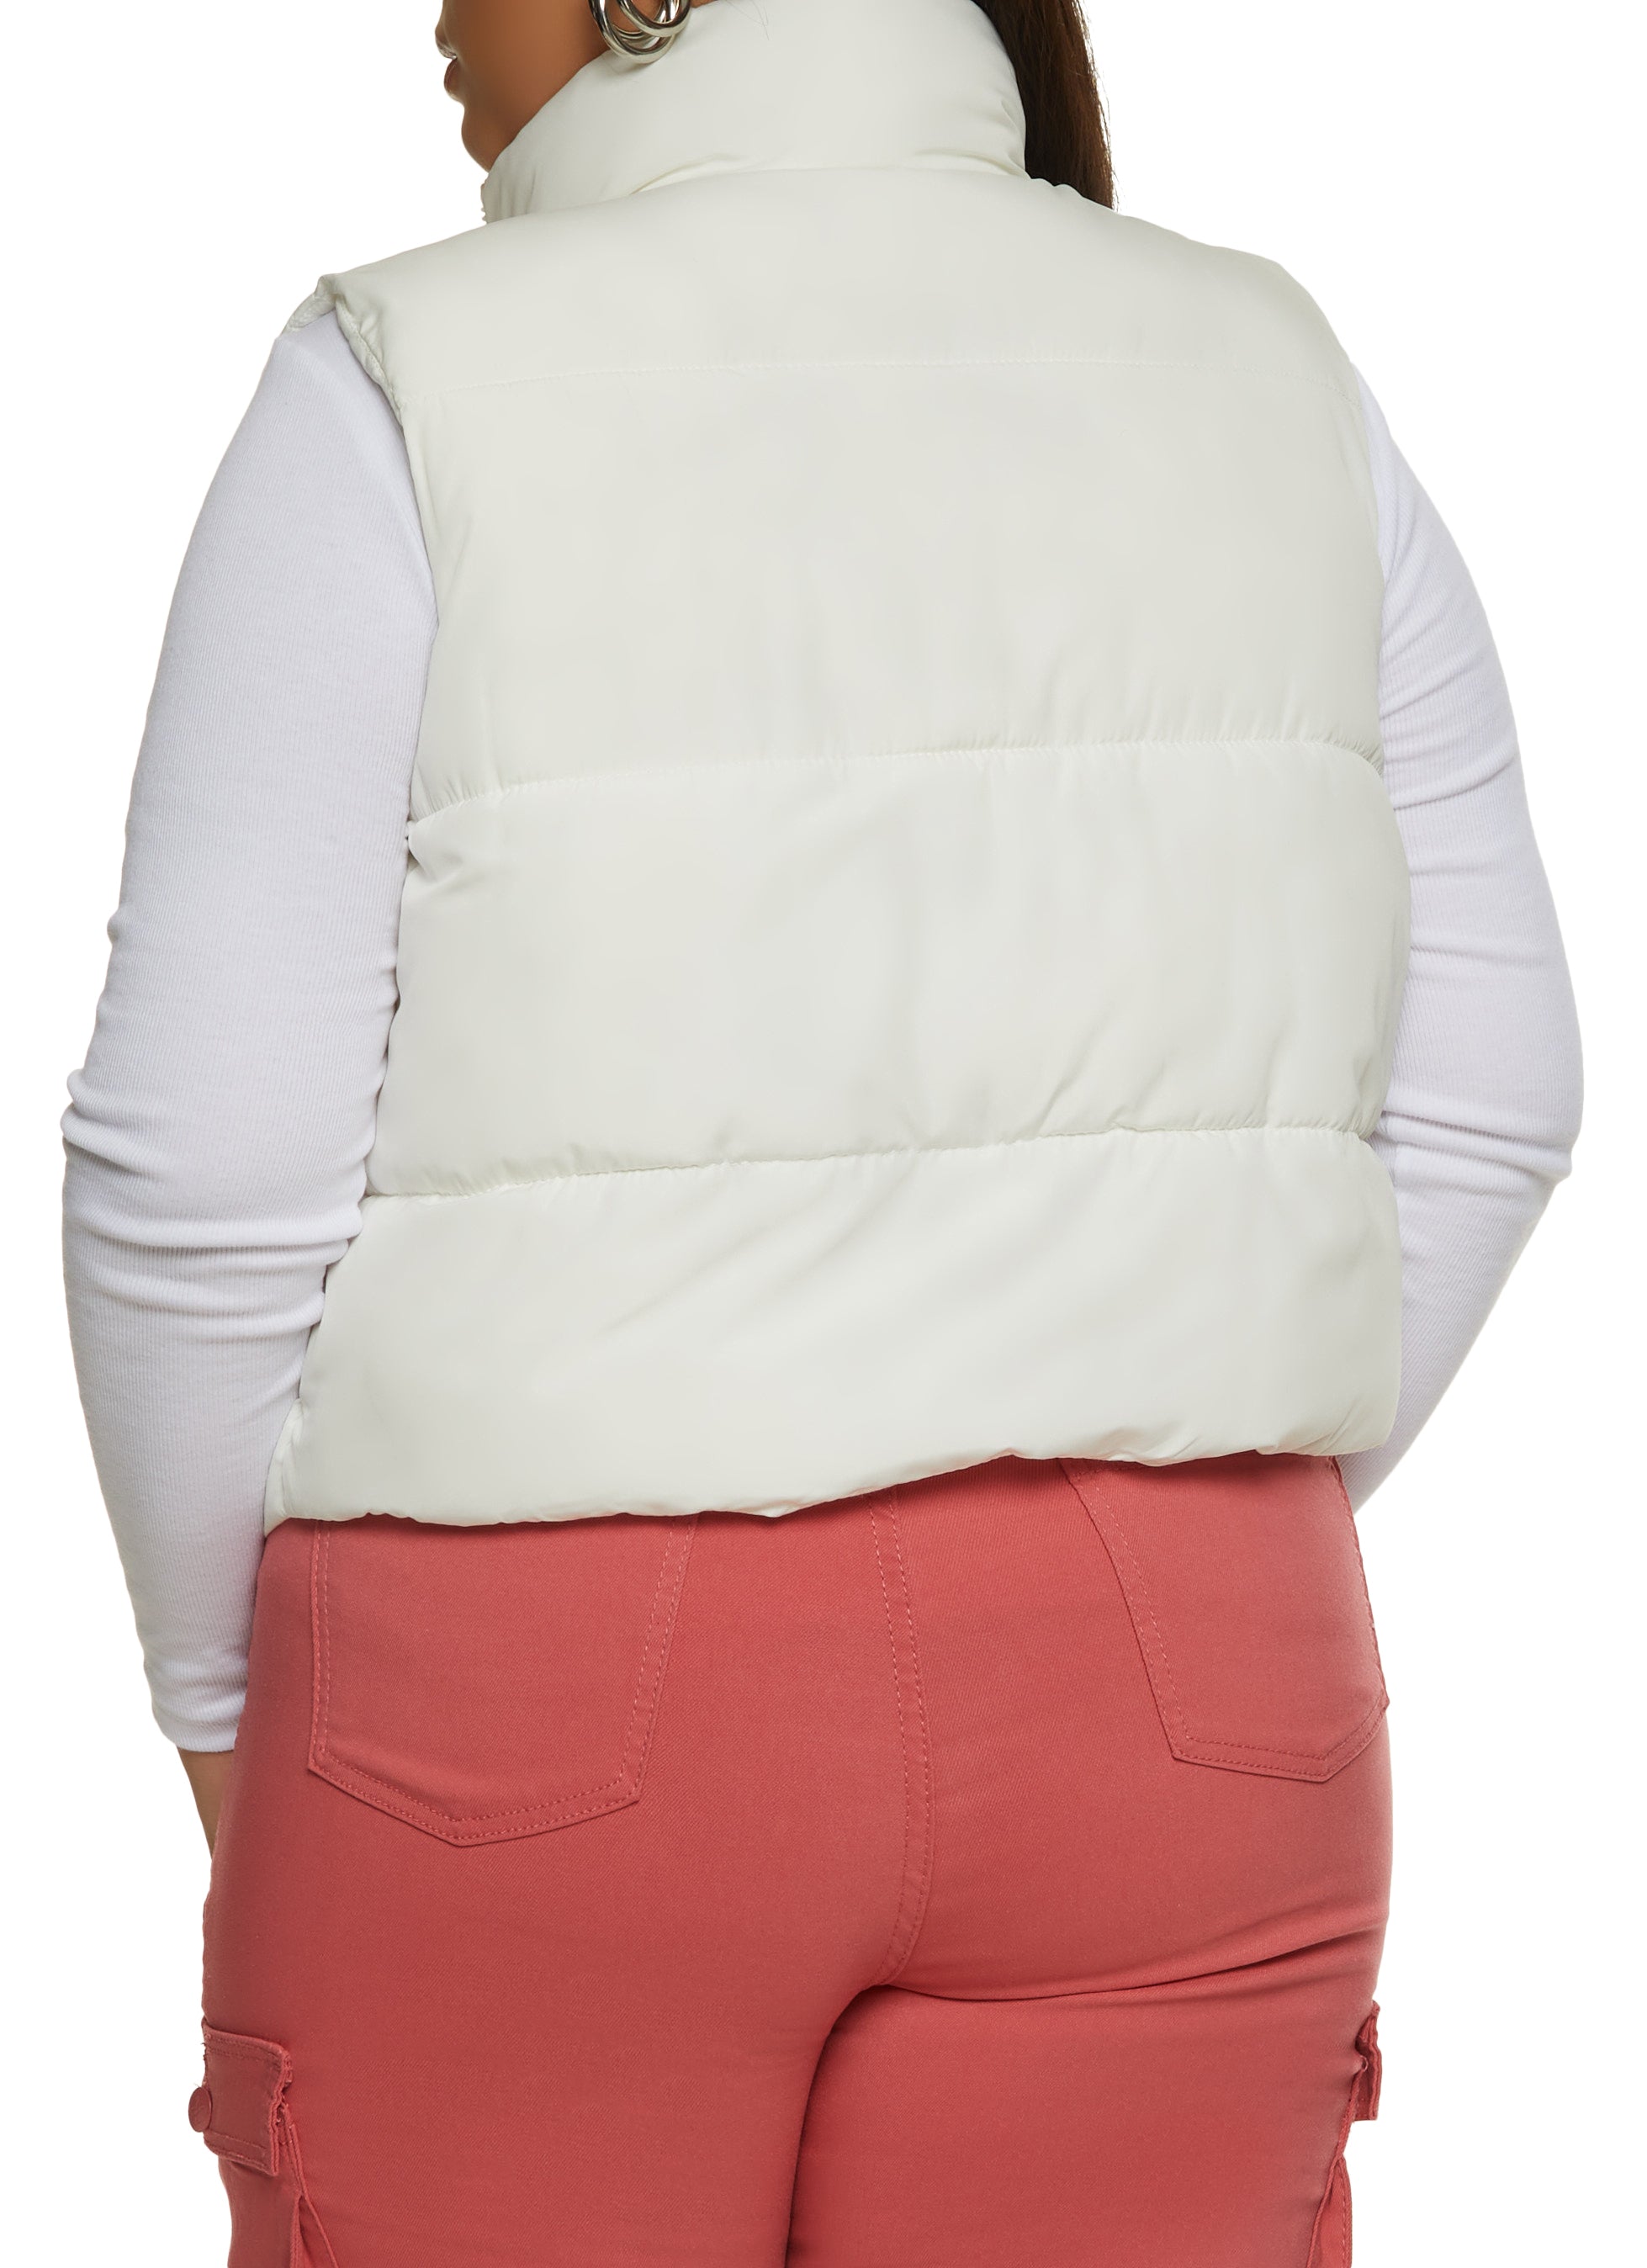 Womens Plus Size Solid Nylon Puffer Vest, White, Size 1X